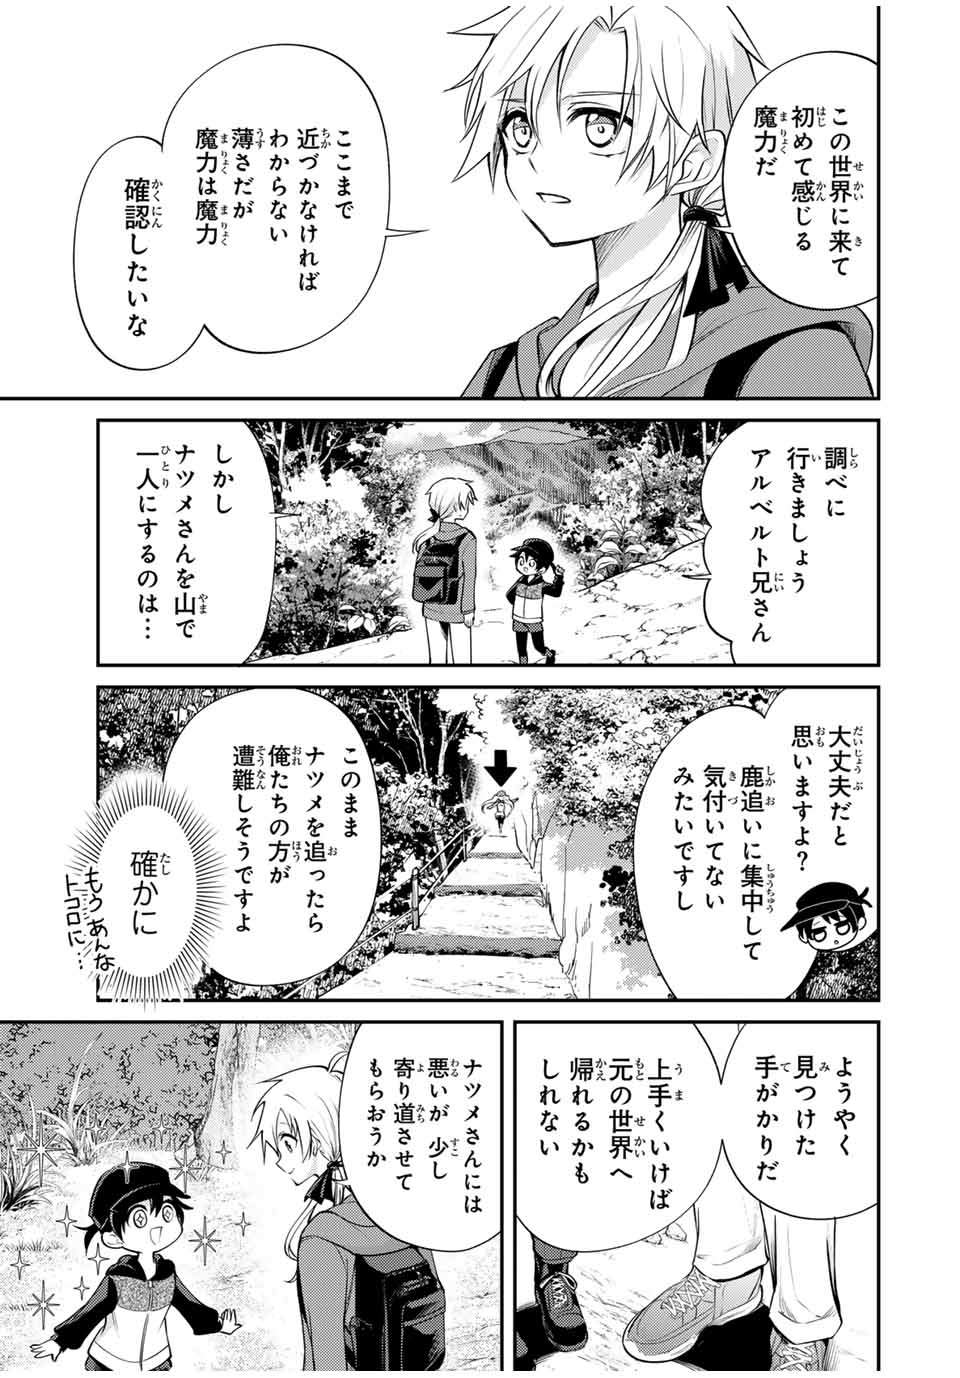 Gendai Teni no Dai Ni Ouji - Chapter 9.1 - Page 5